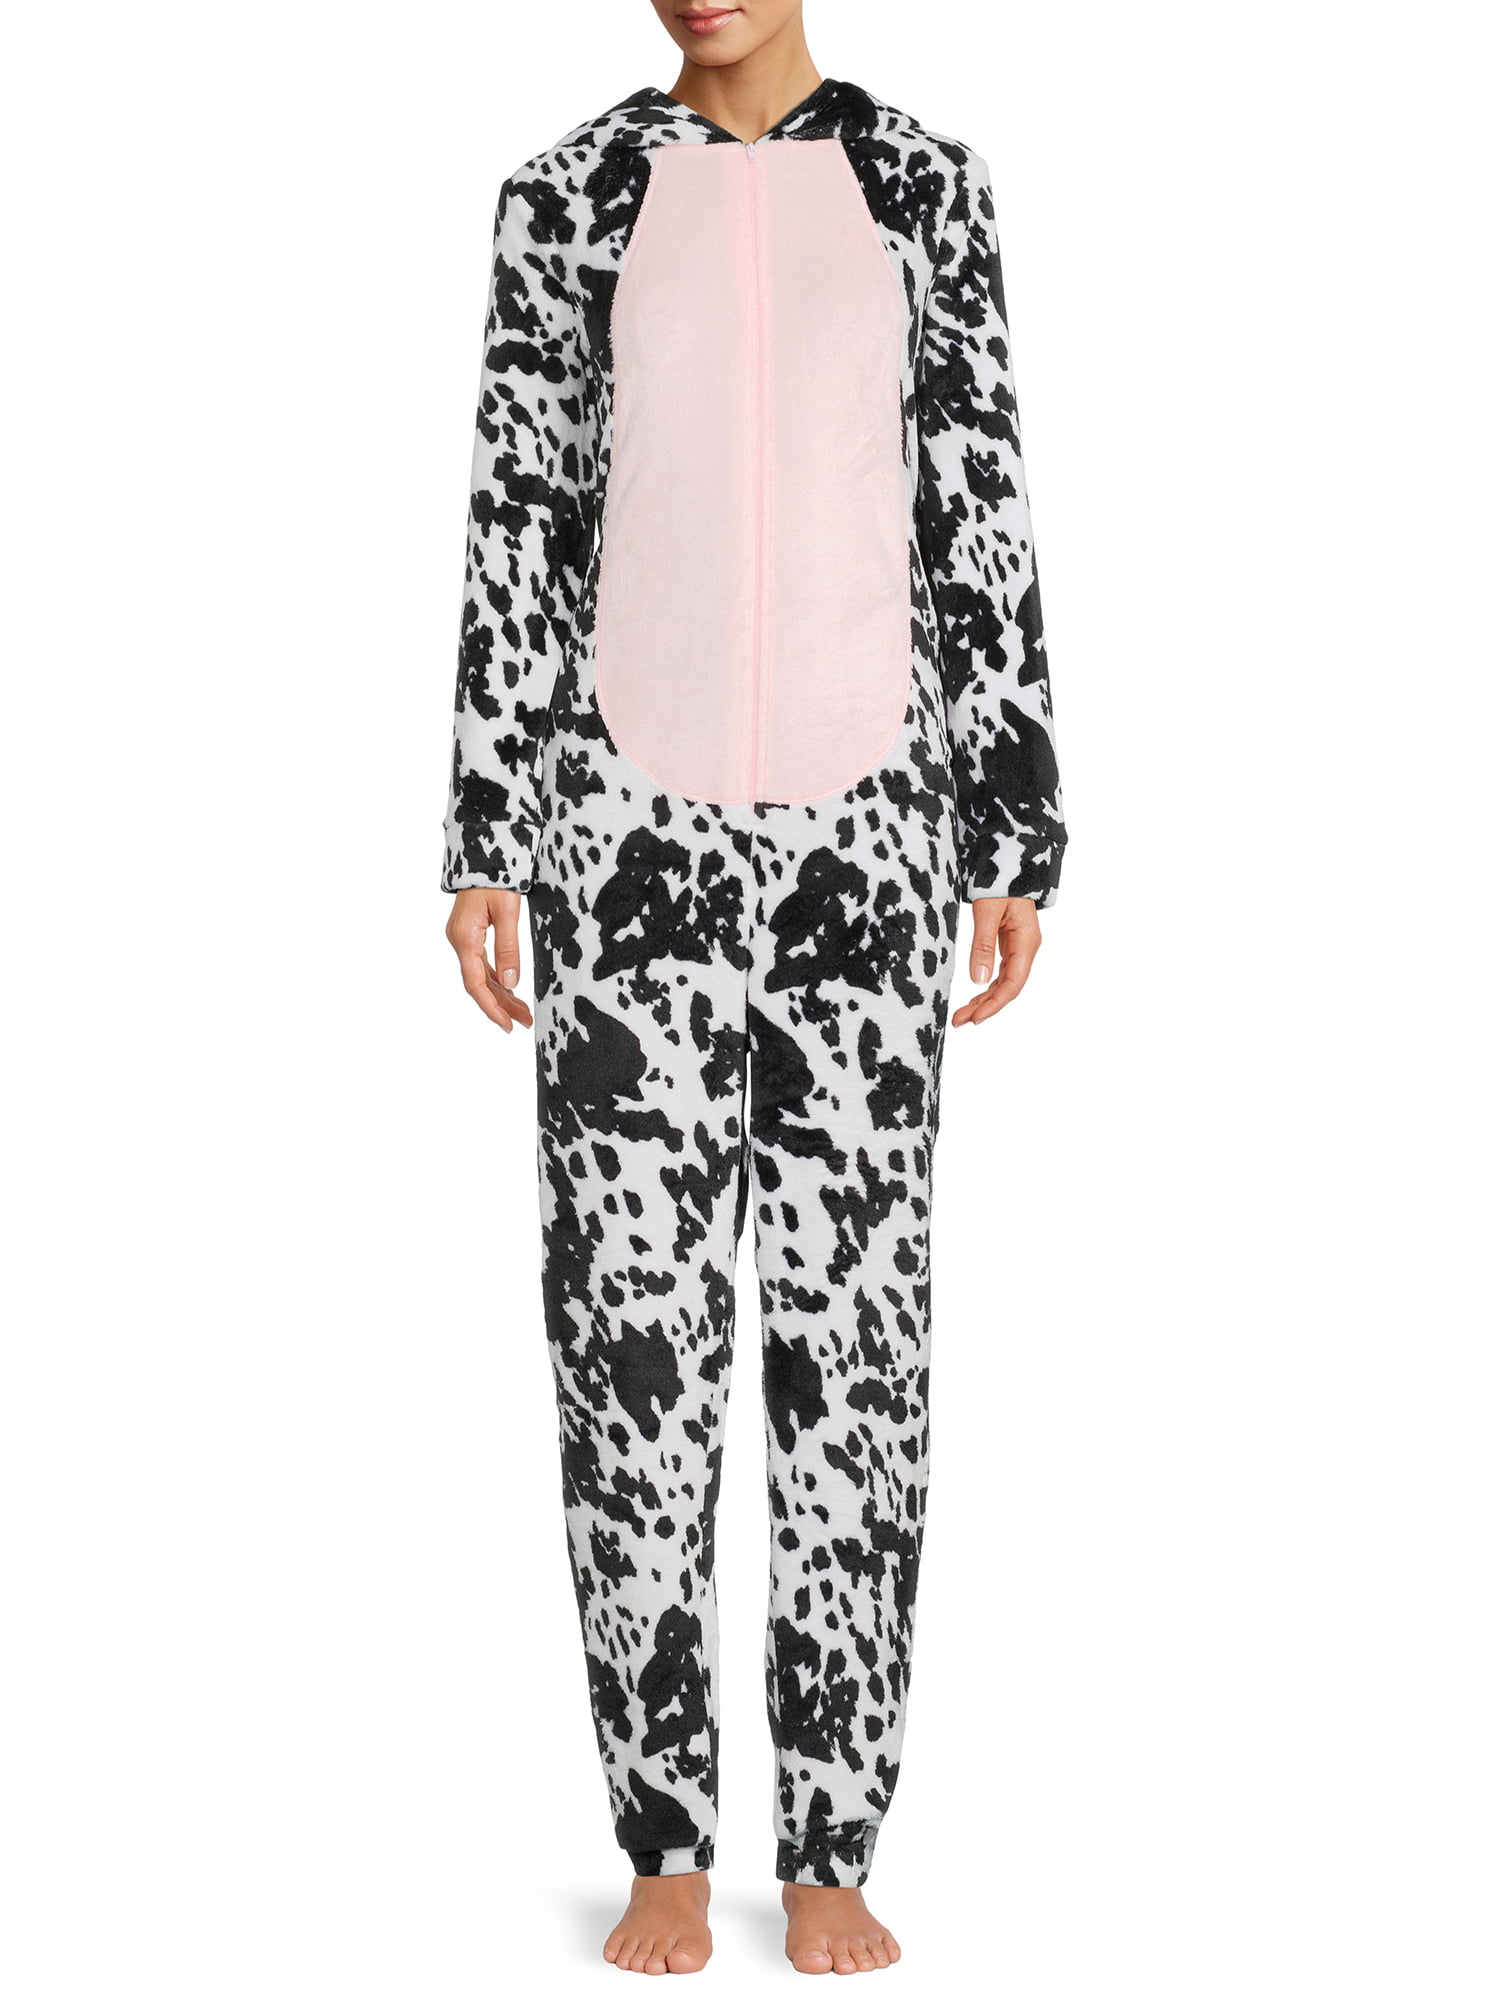 WOMEN FASHION Underwear & Nightwear Pyjama Gray/Pink XS discount 59% Primark Pajamas combined gray print cat 